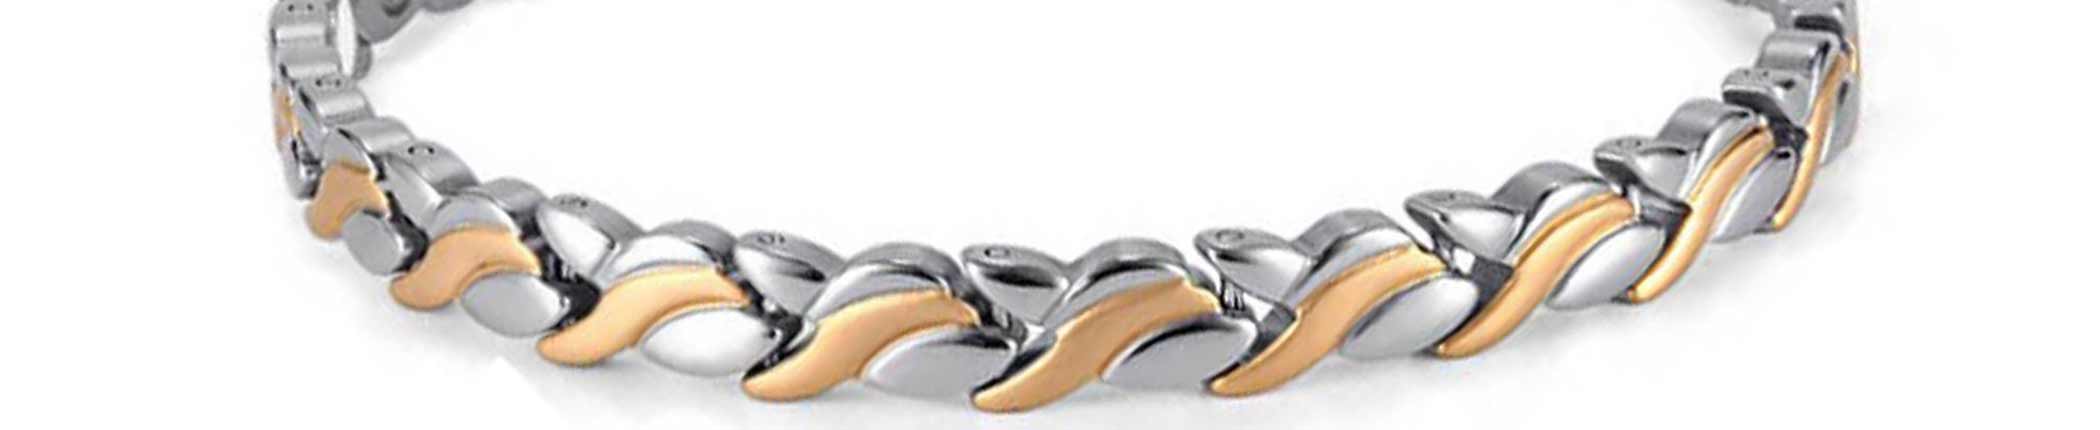 Power Wristband Bracelet Stainless Steel Expandable| Alibaba.com